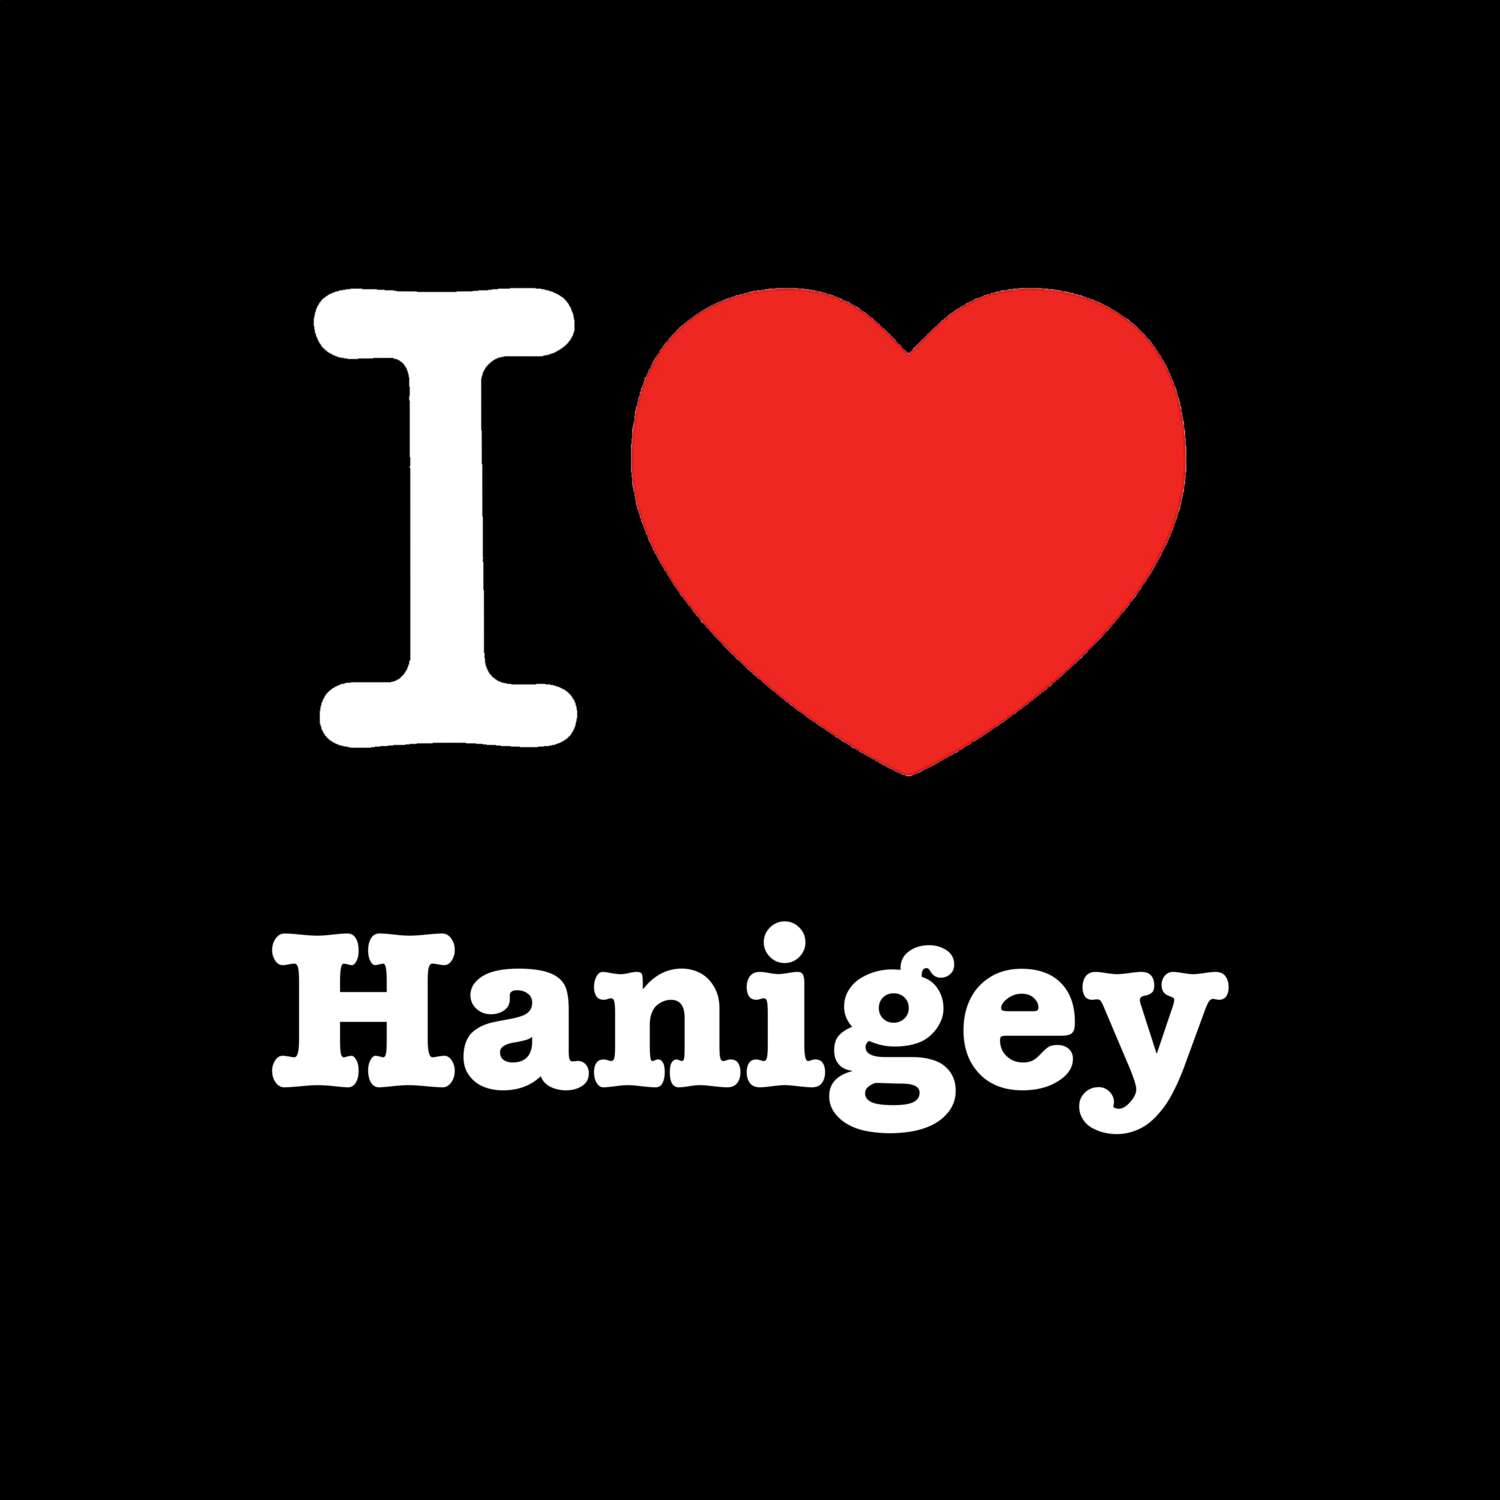 Hanigey T-Shirt »I love«